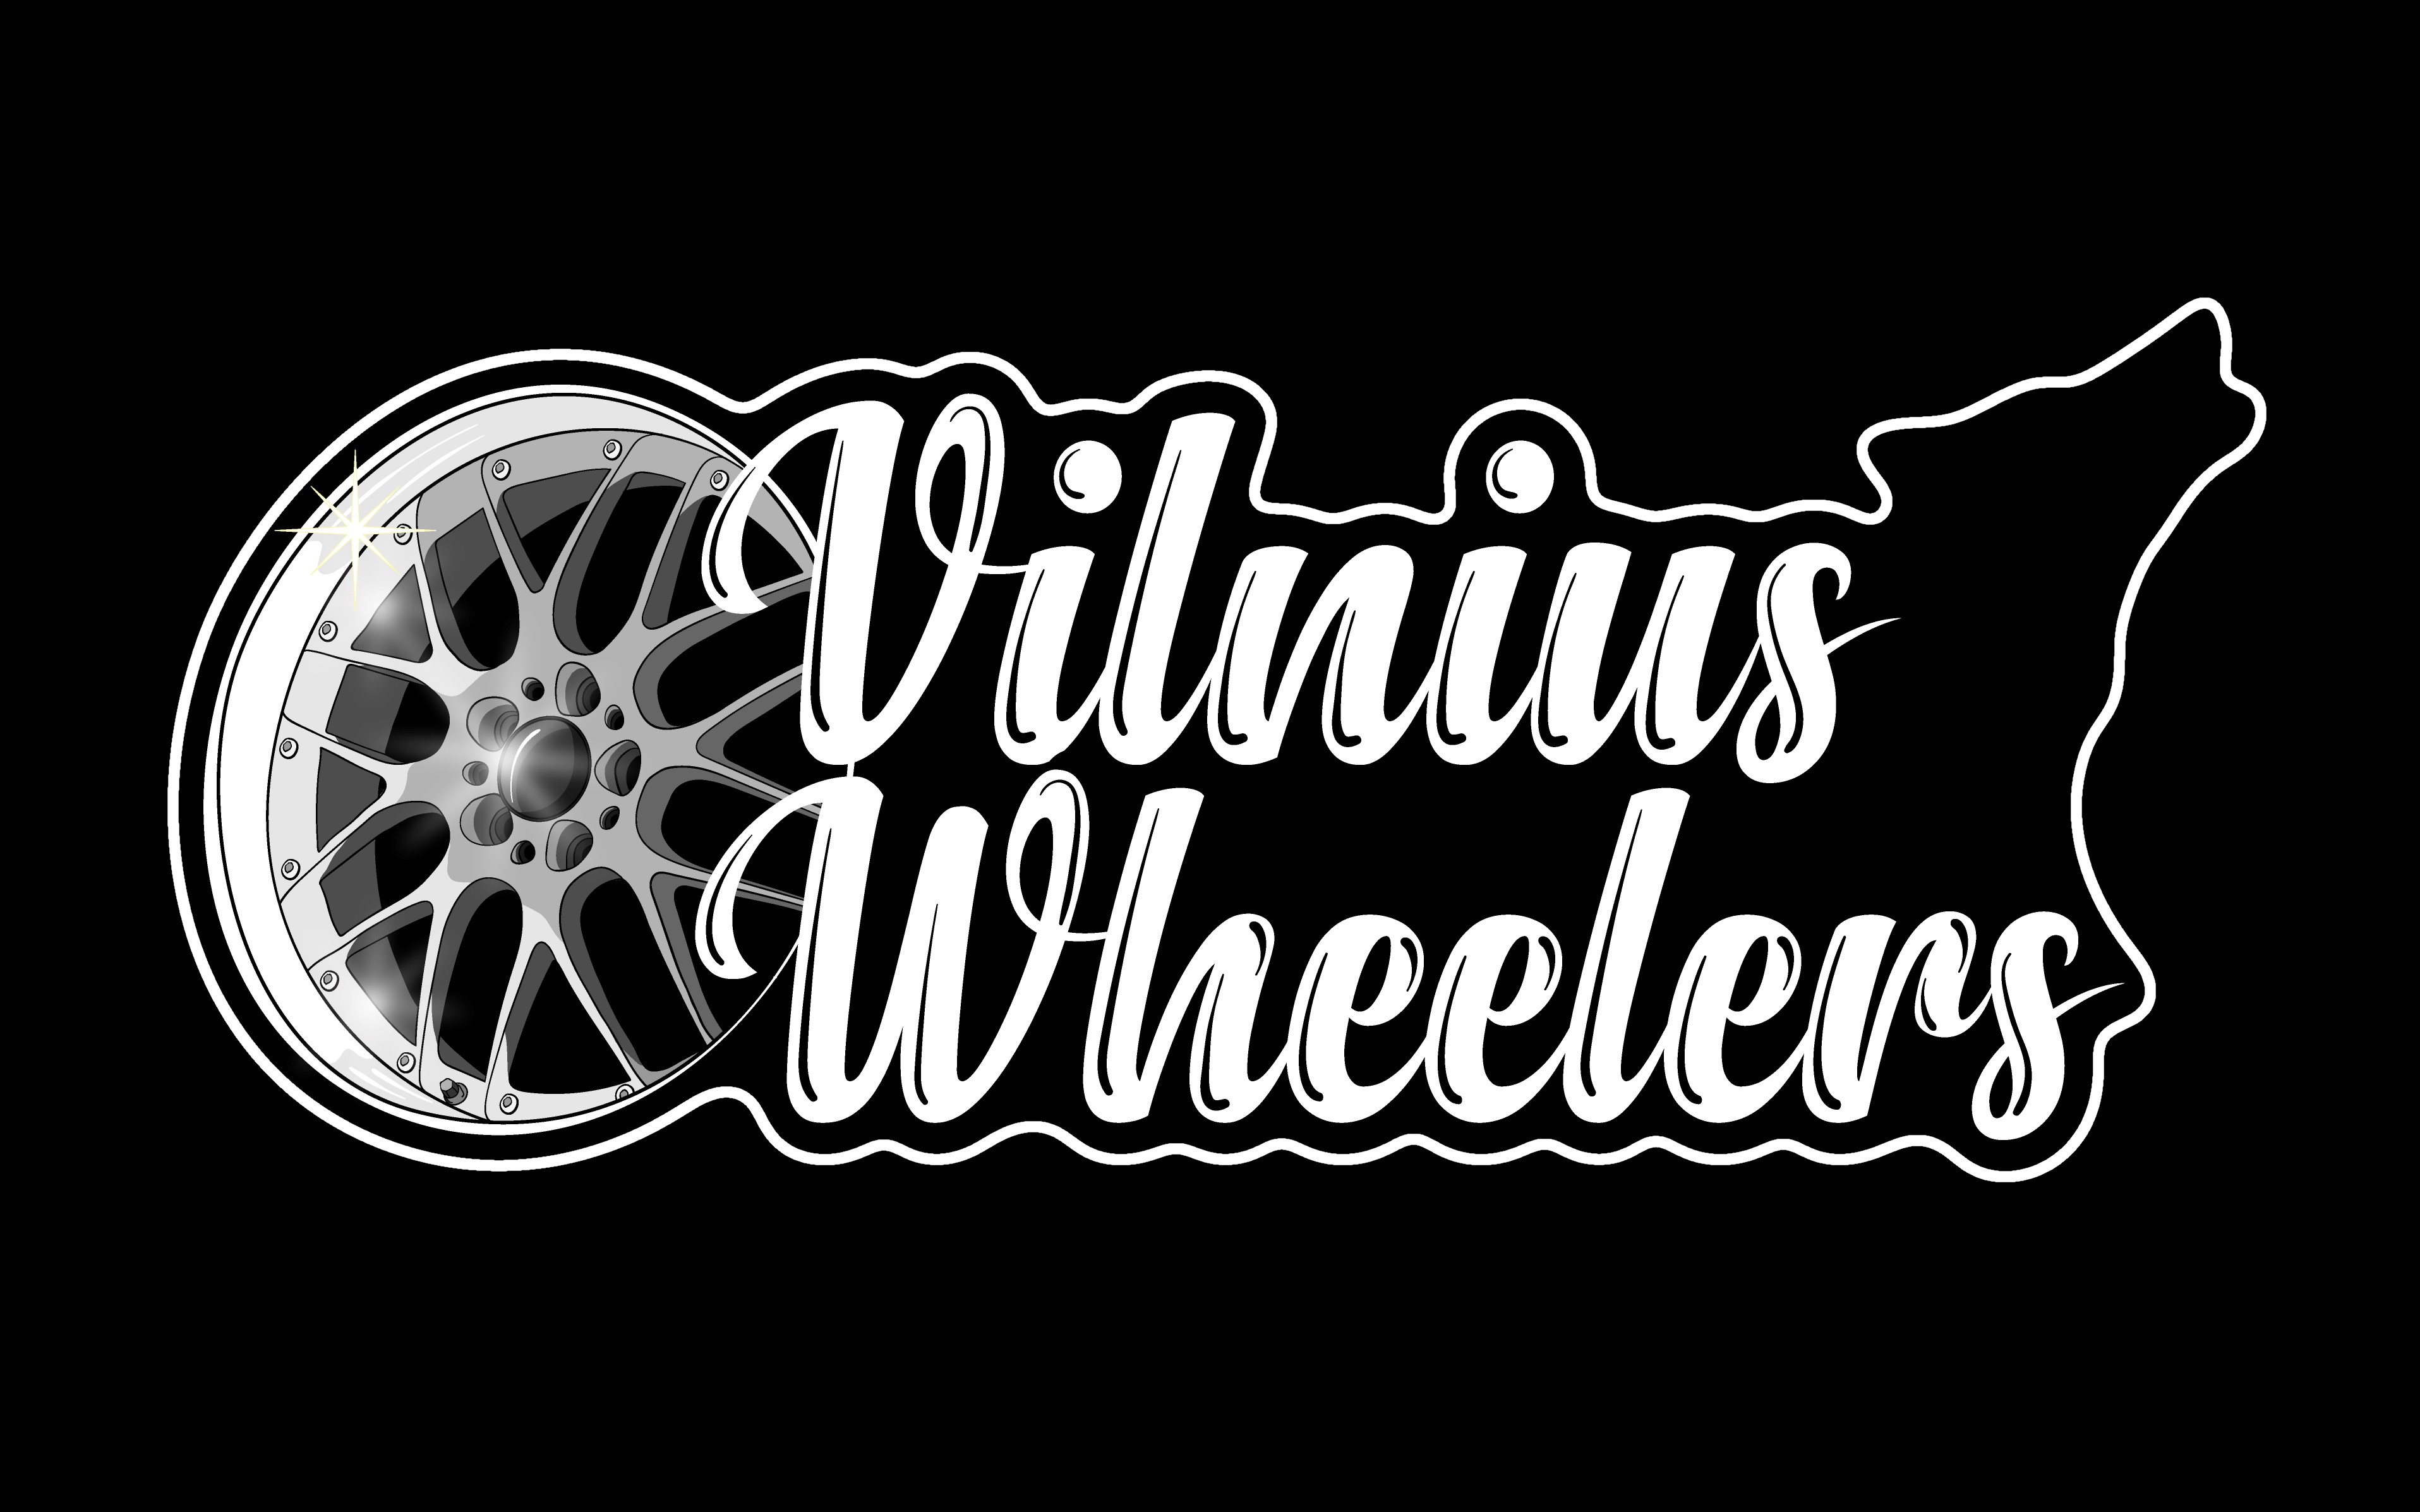 Vilnius Wheelers